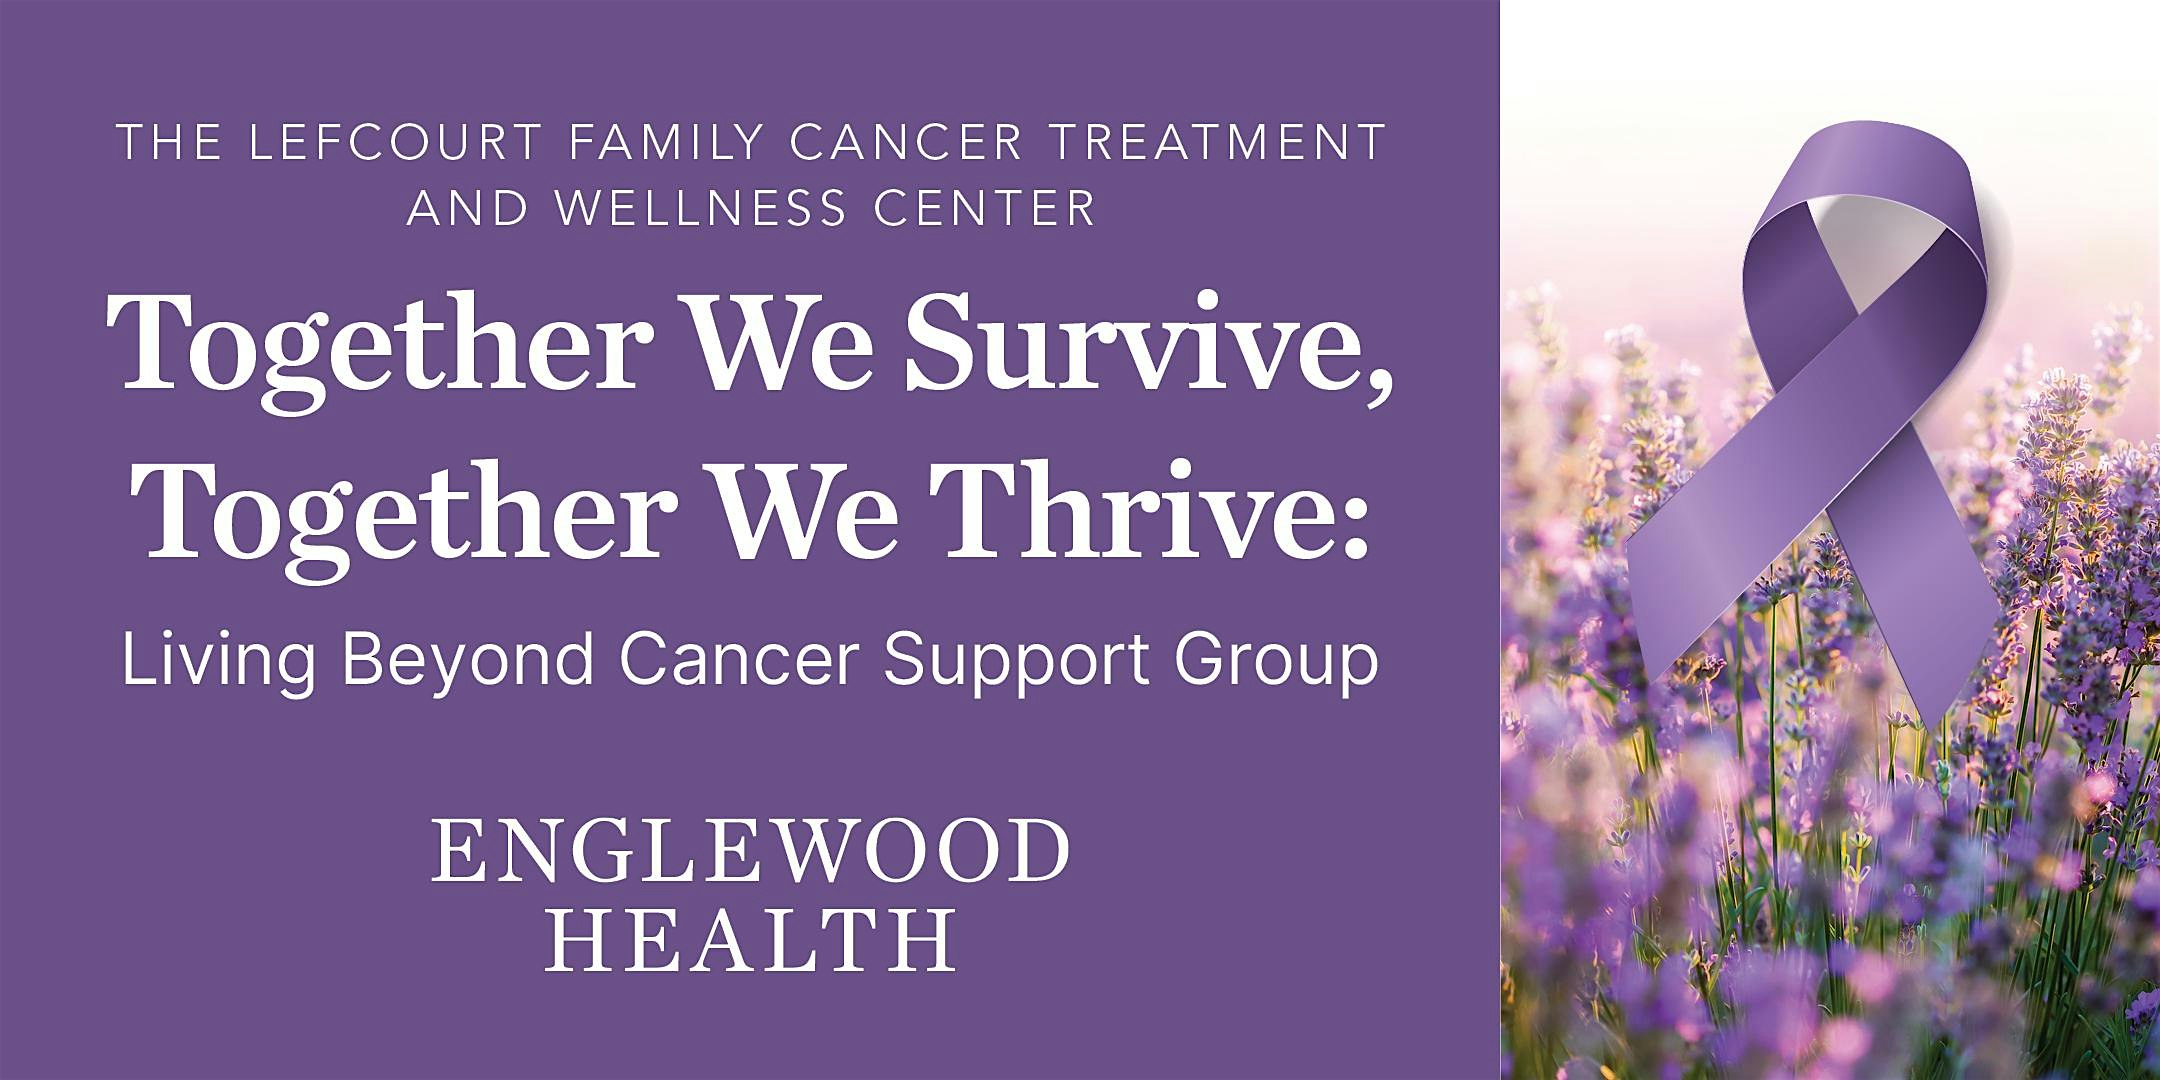 More info: Together We Survive, Together We Thrive: Living Beyond Cancer Support Group